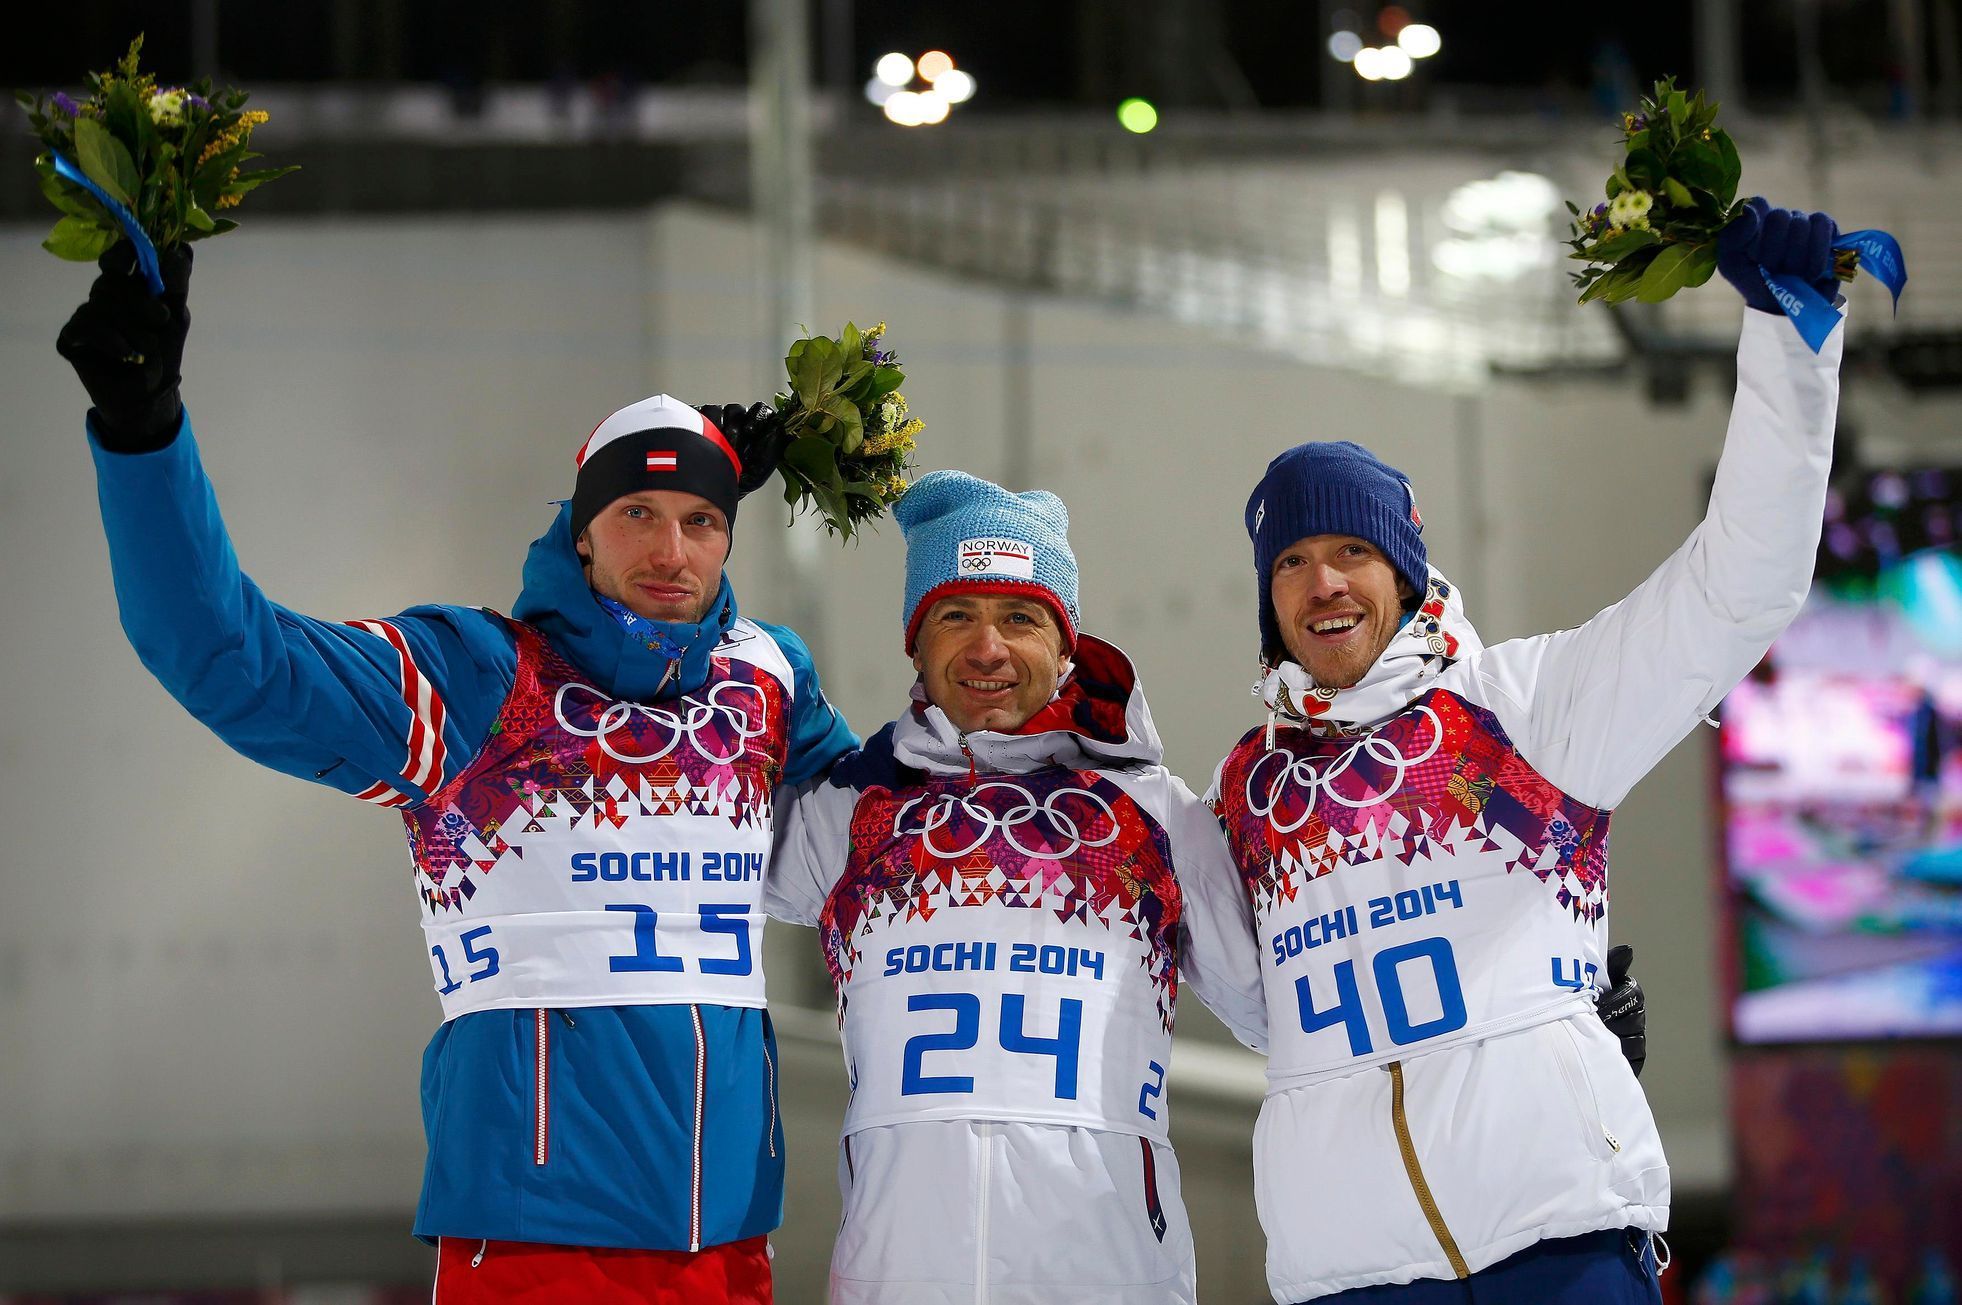 Soči 2014, biatlon 10 km: Dominik Landertinger, Ole Einar Björndalen a Jaroslav Soukup